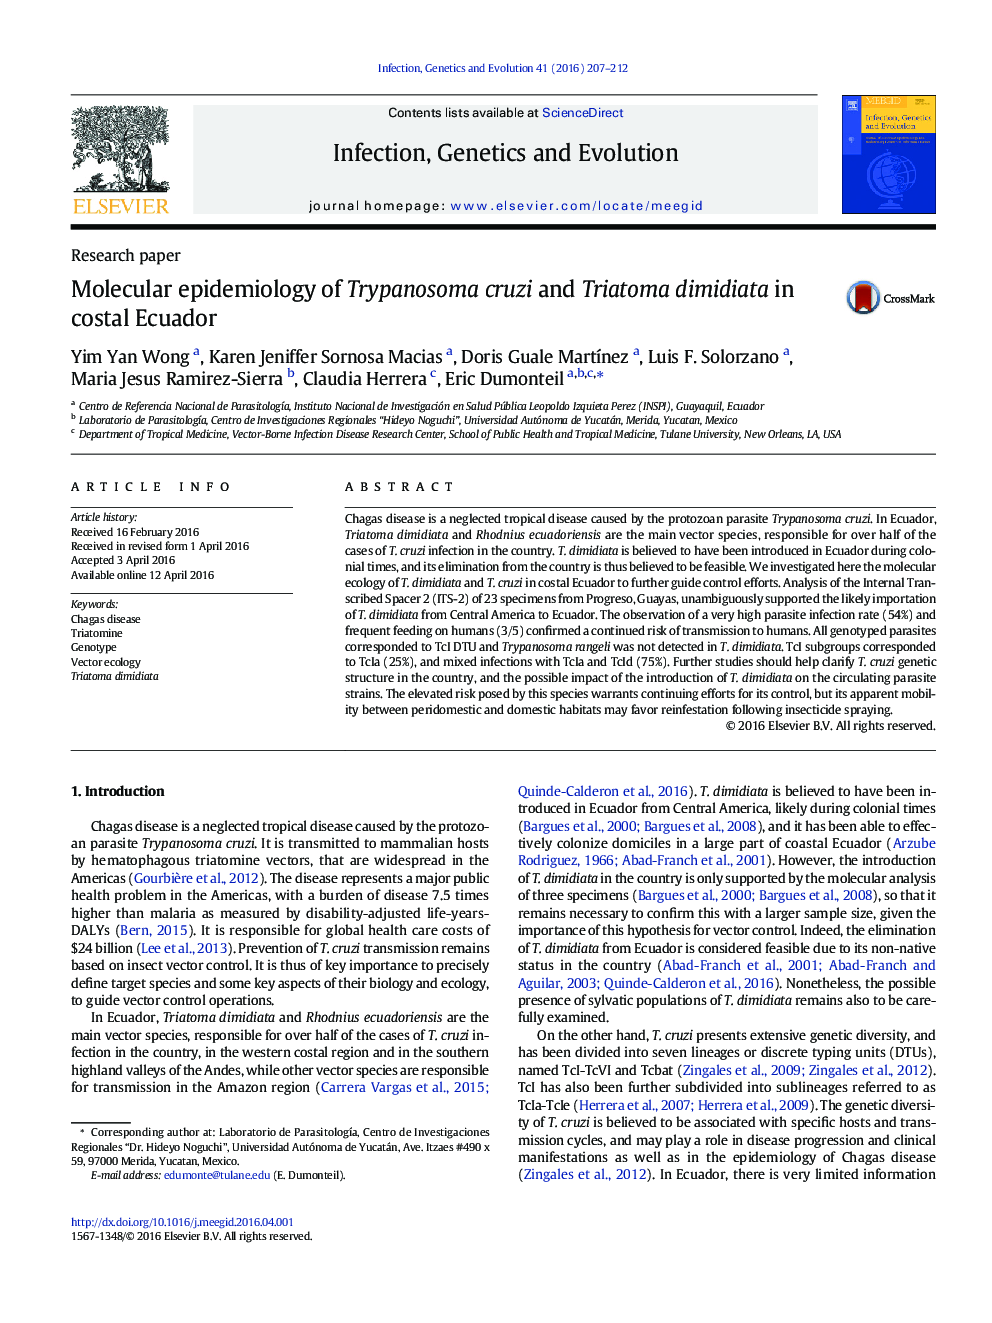 Molecular epidemiology of Trypanosoma cruzi and Triatoma dimidiata in costal Ecuador